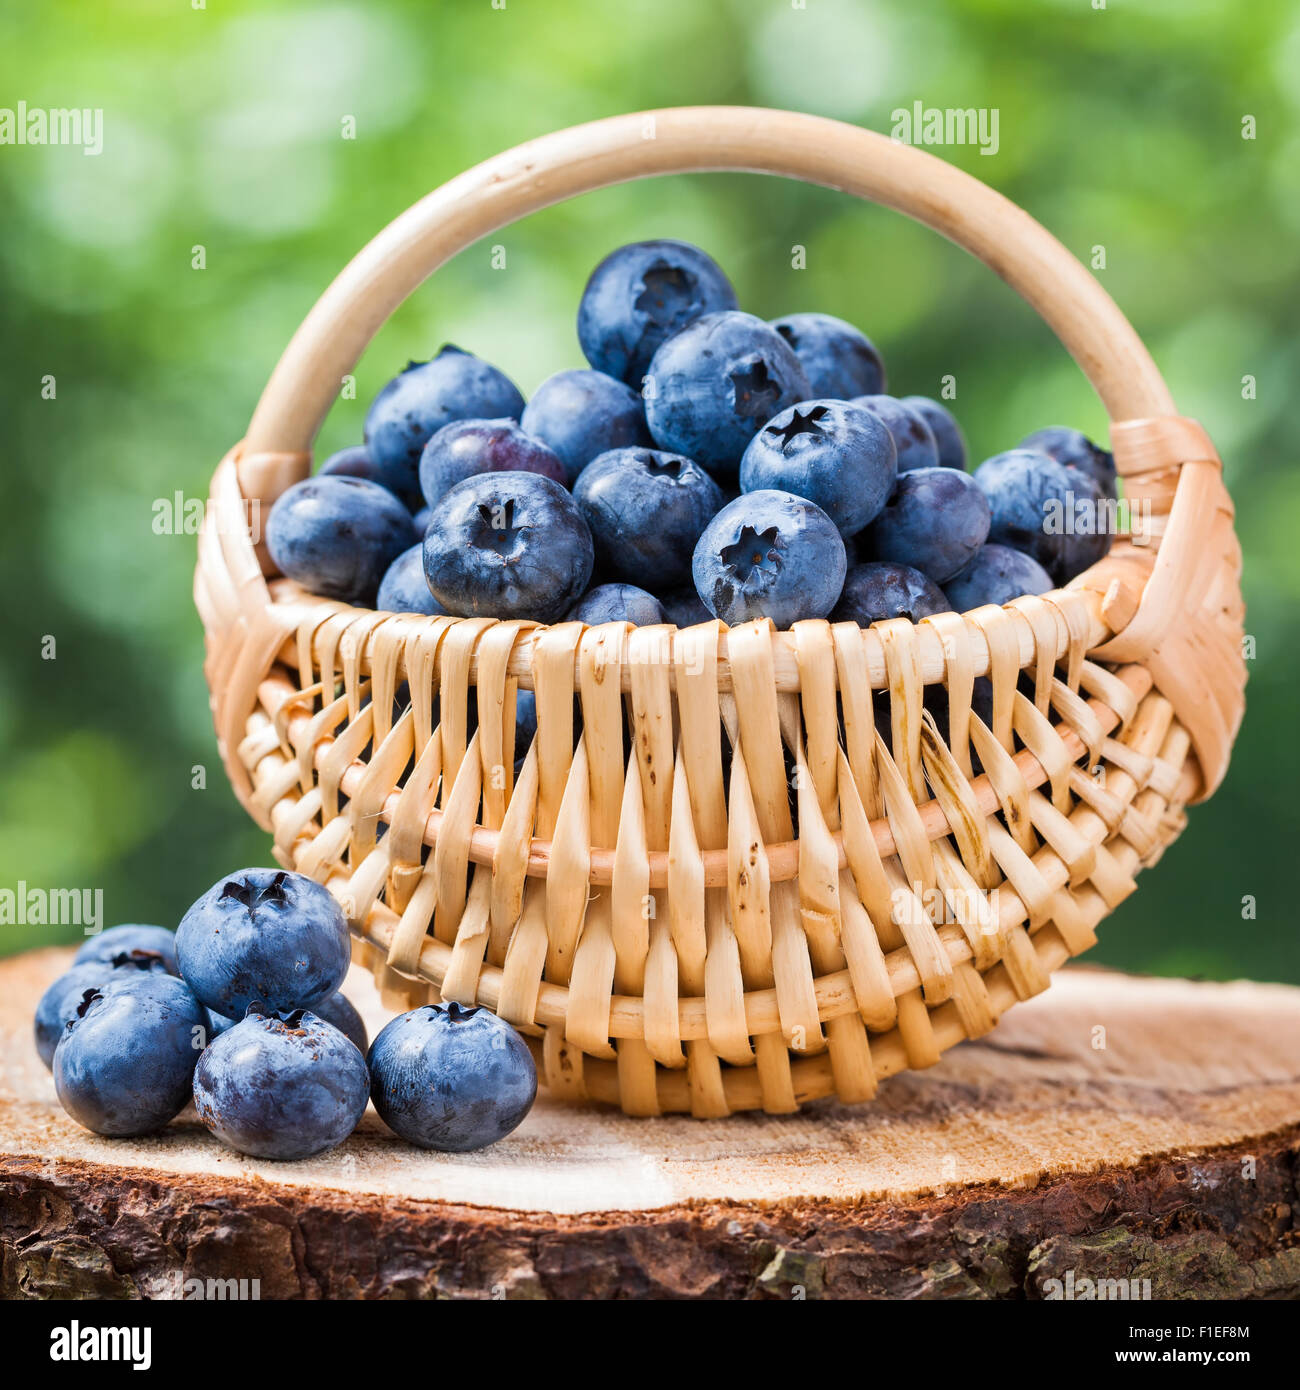 Basket with fresh blueberries on stump Stock Photo